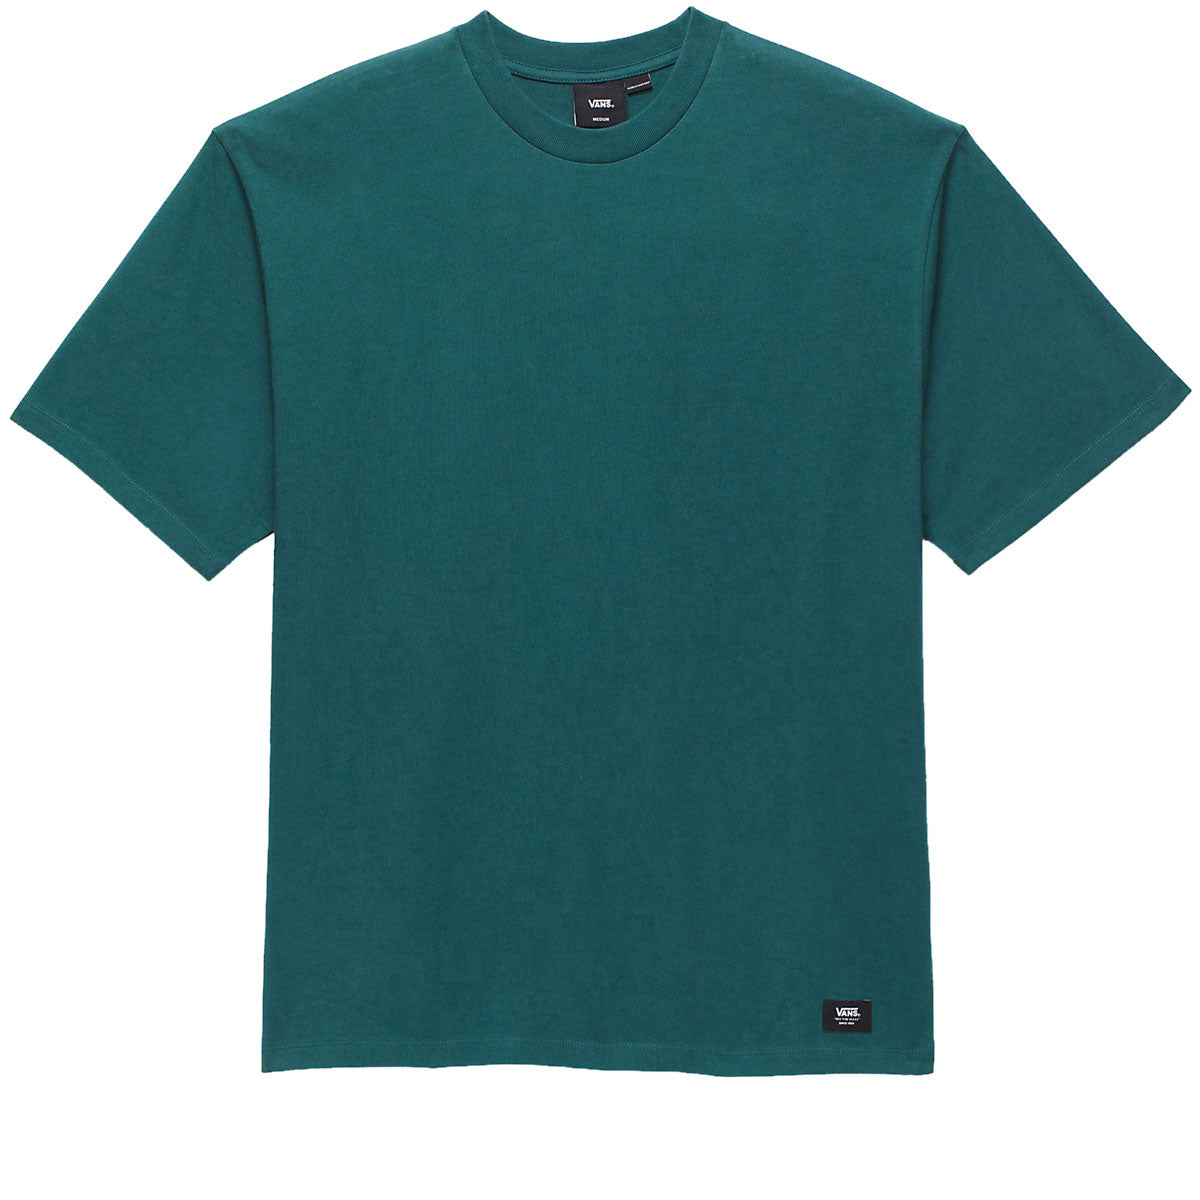 Vans Original Standards T-Shirt - Bistro Green image 1